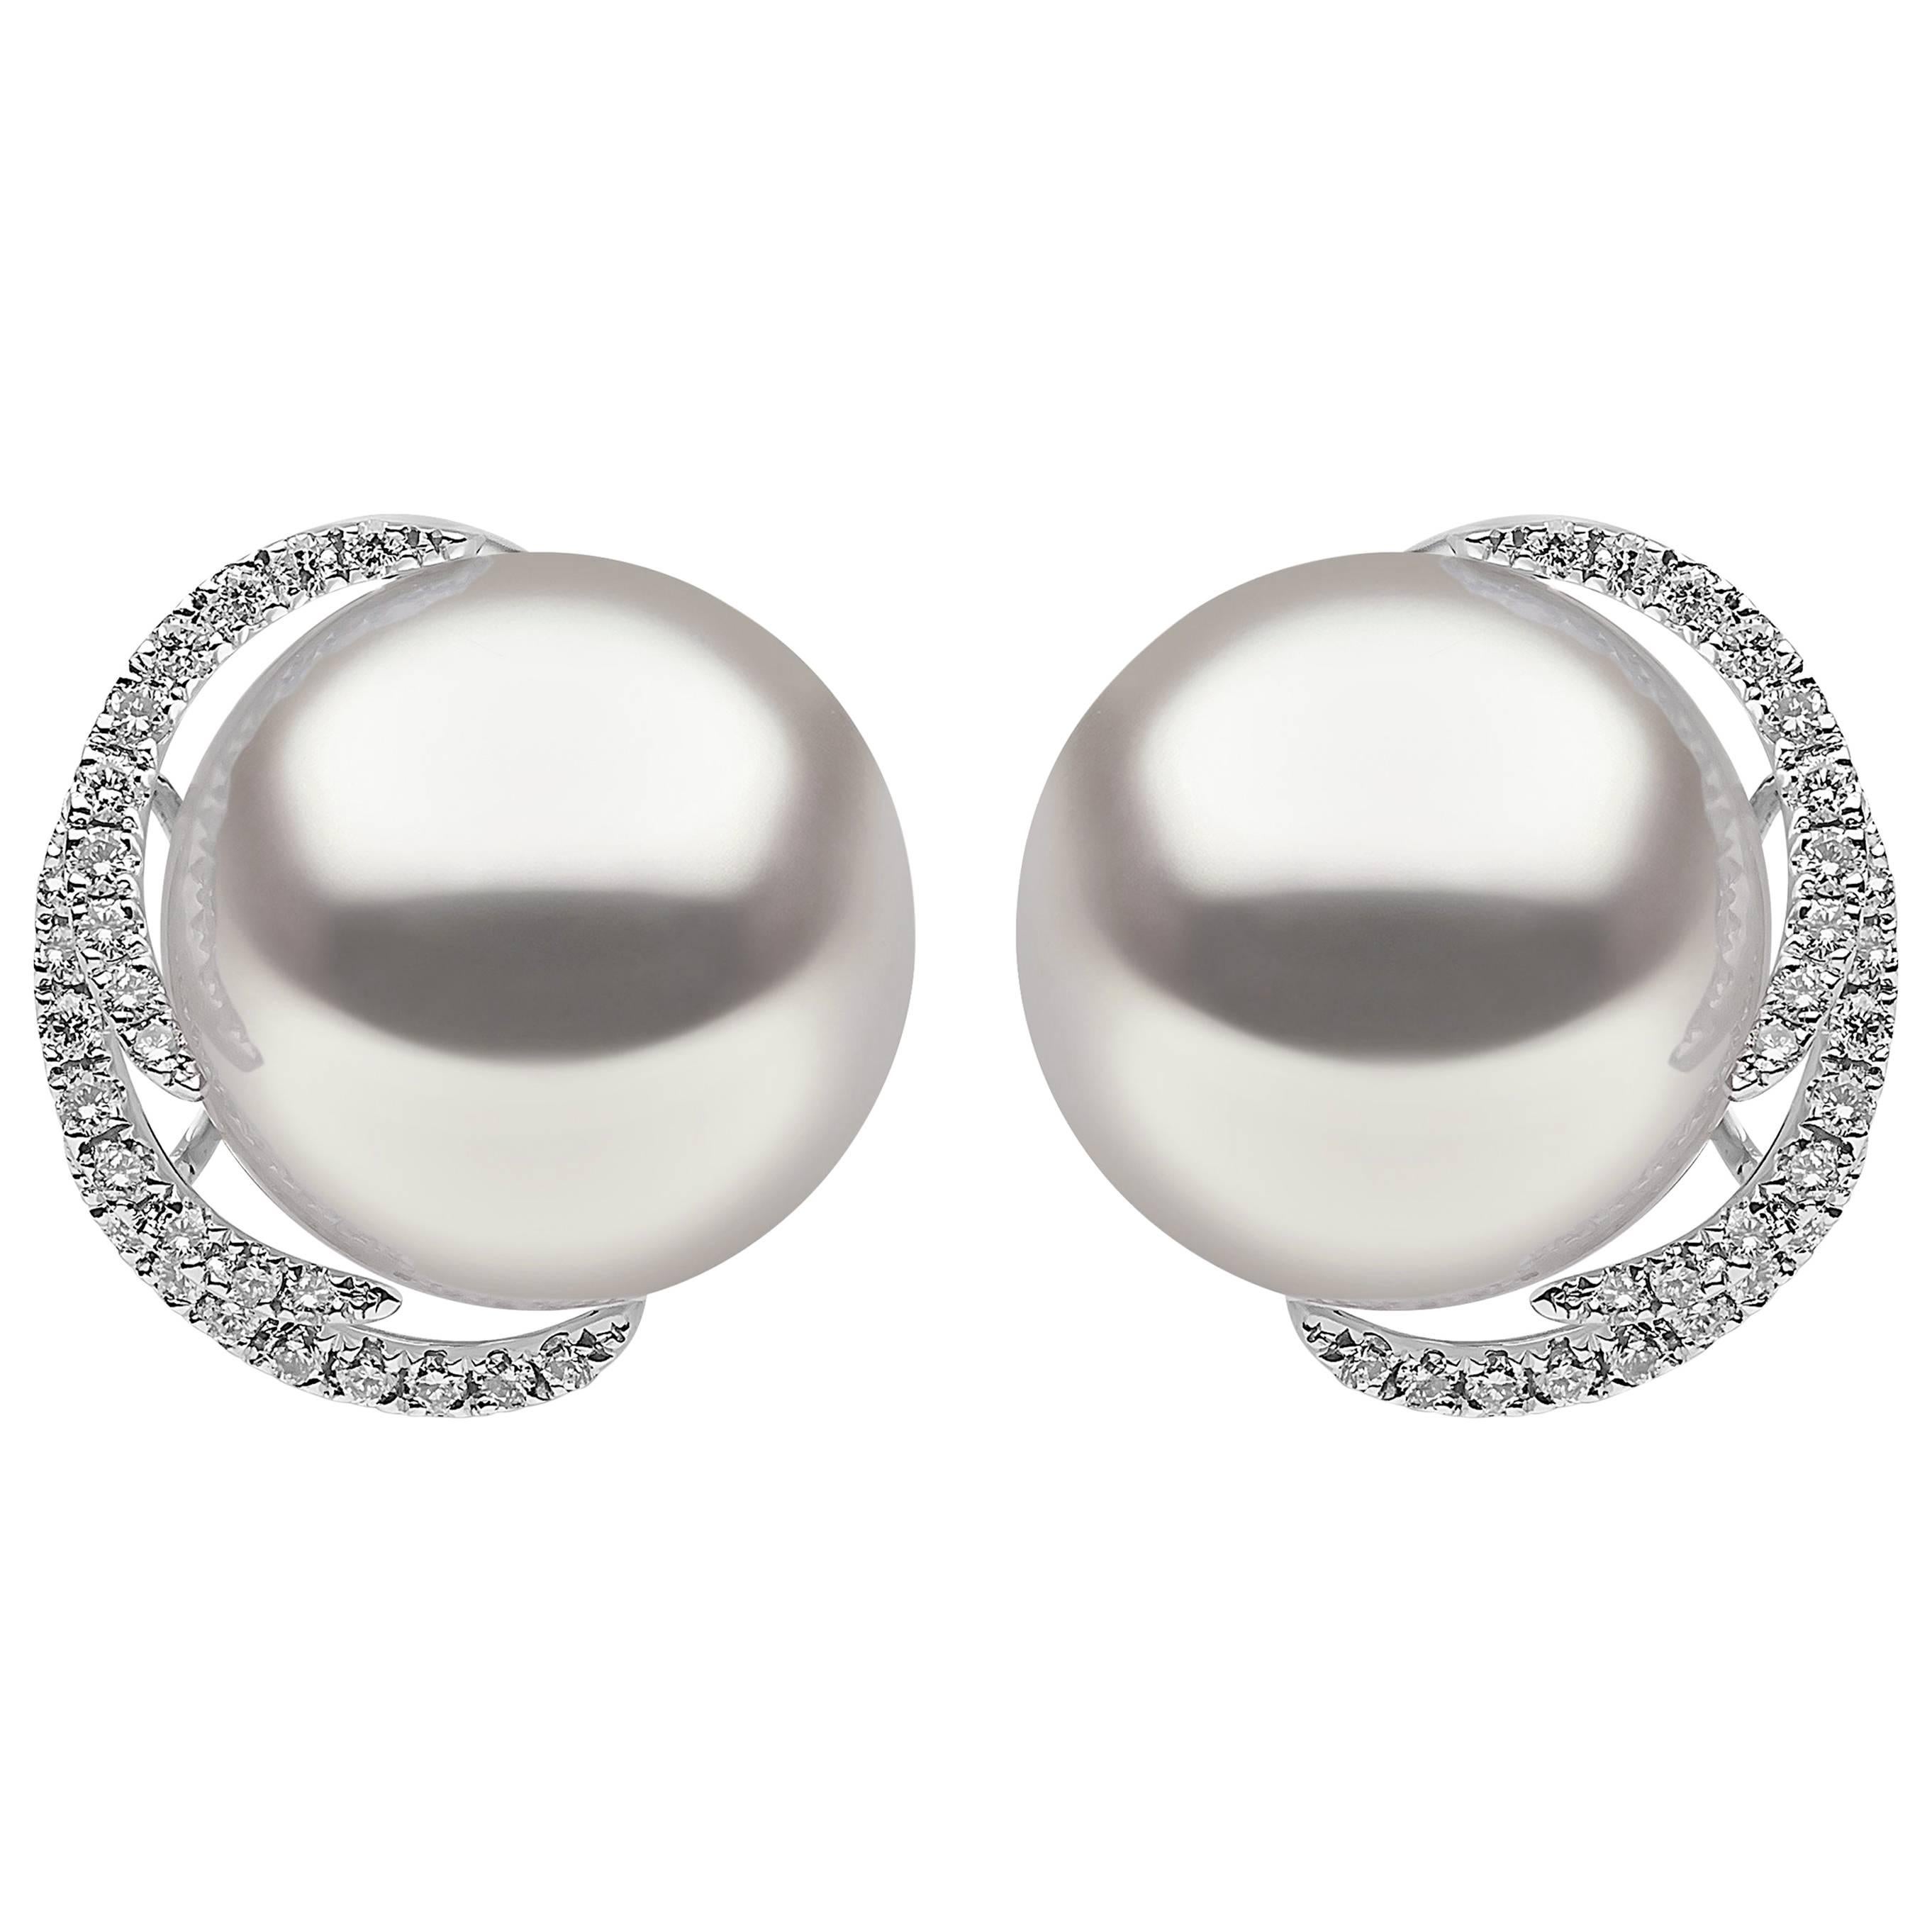 Yoko London South Sea Pearl and Diamond Ear Studs Set in 18 Karat White Gold